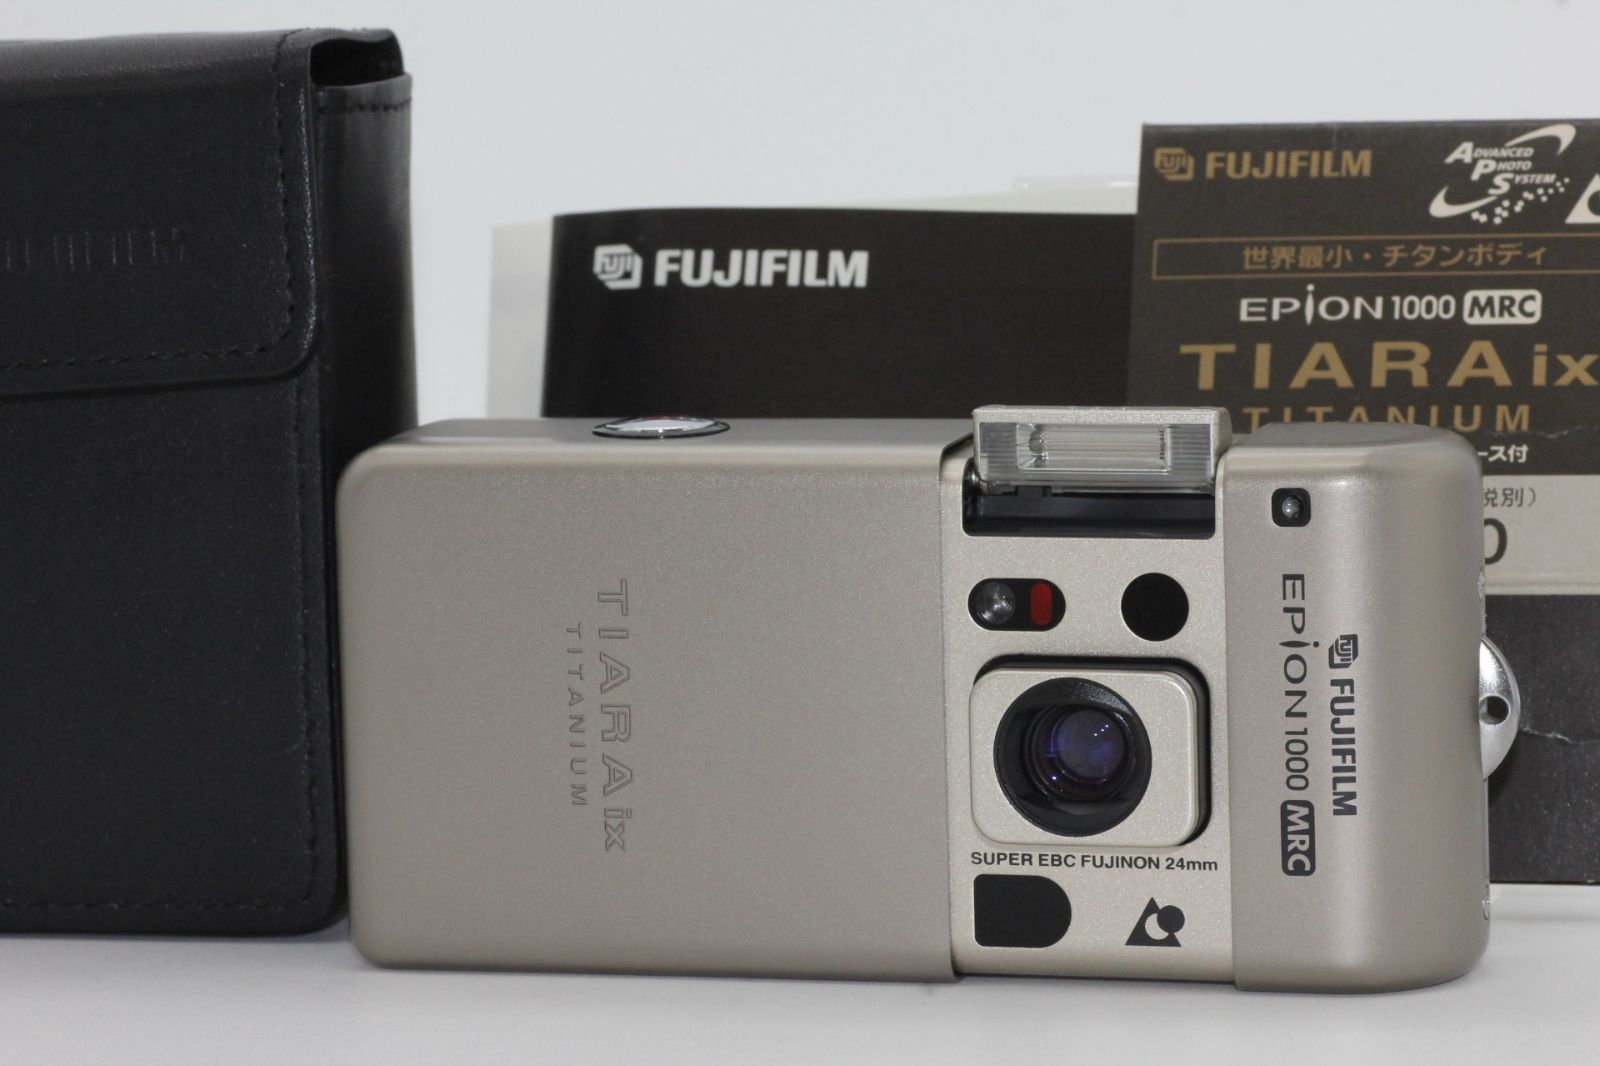 FUJIFILM EPION1000MRC TIARA ix TITANIUM 割り引き - フィルムカメラ